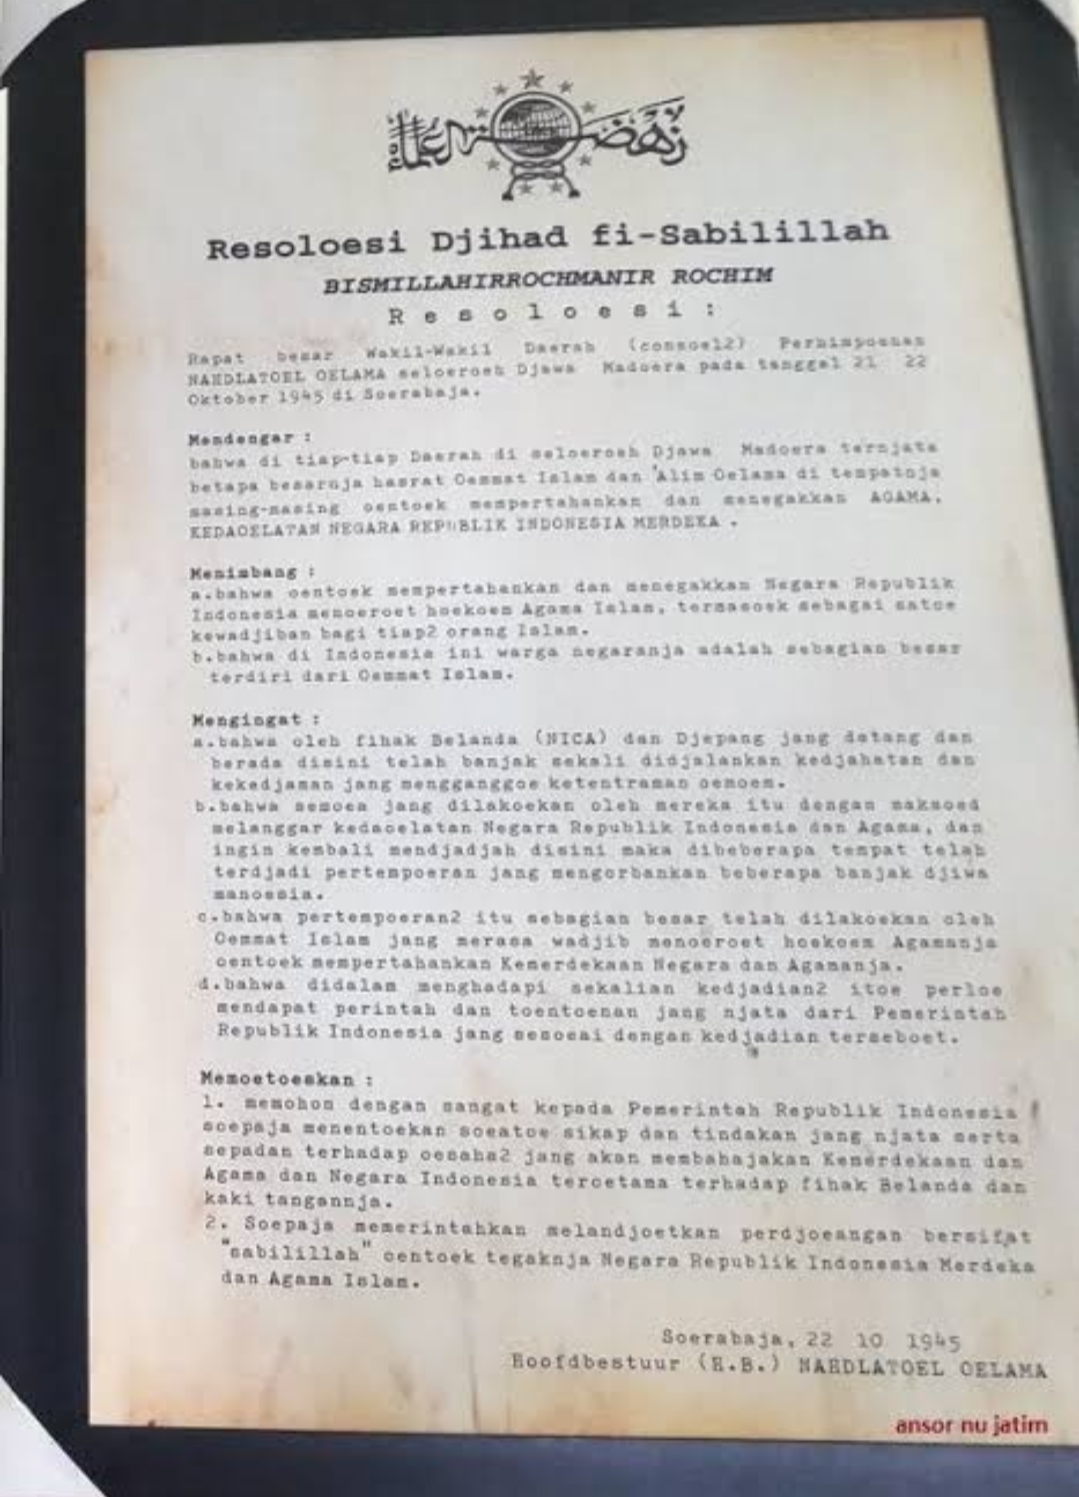 Resolusi jihad yang dikeluarkan pada tanggal 22 oktober 1945 dikeluarkan oleh